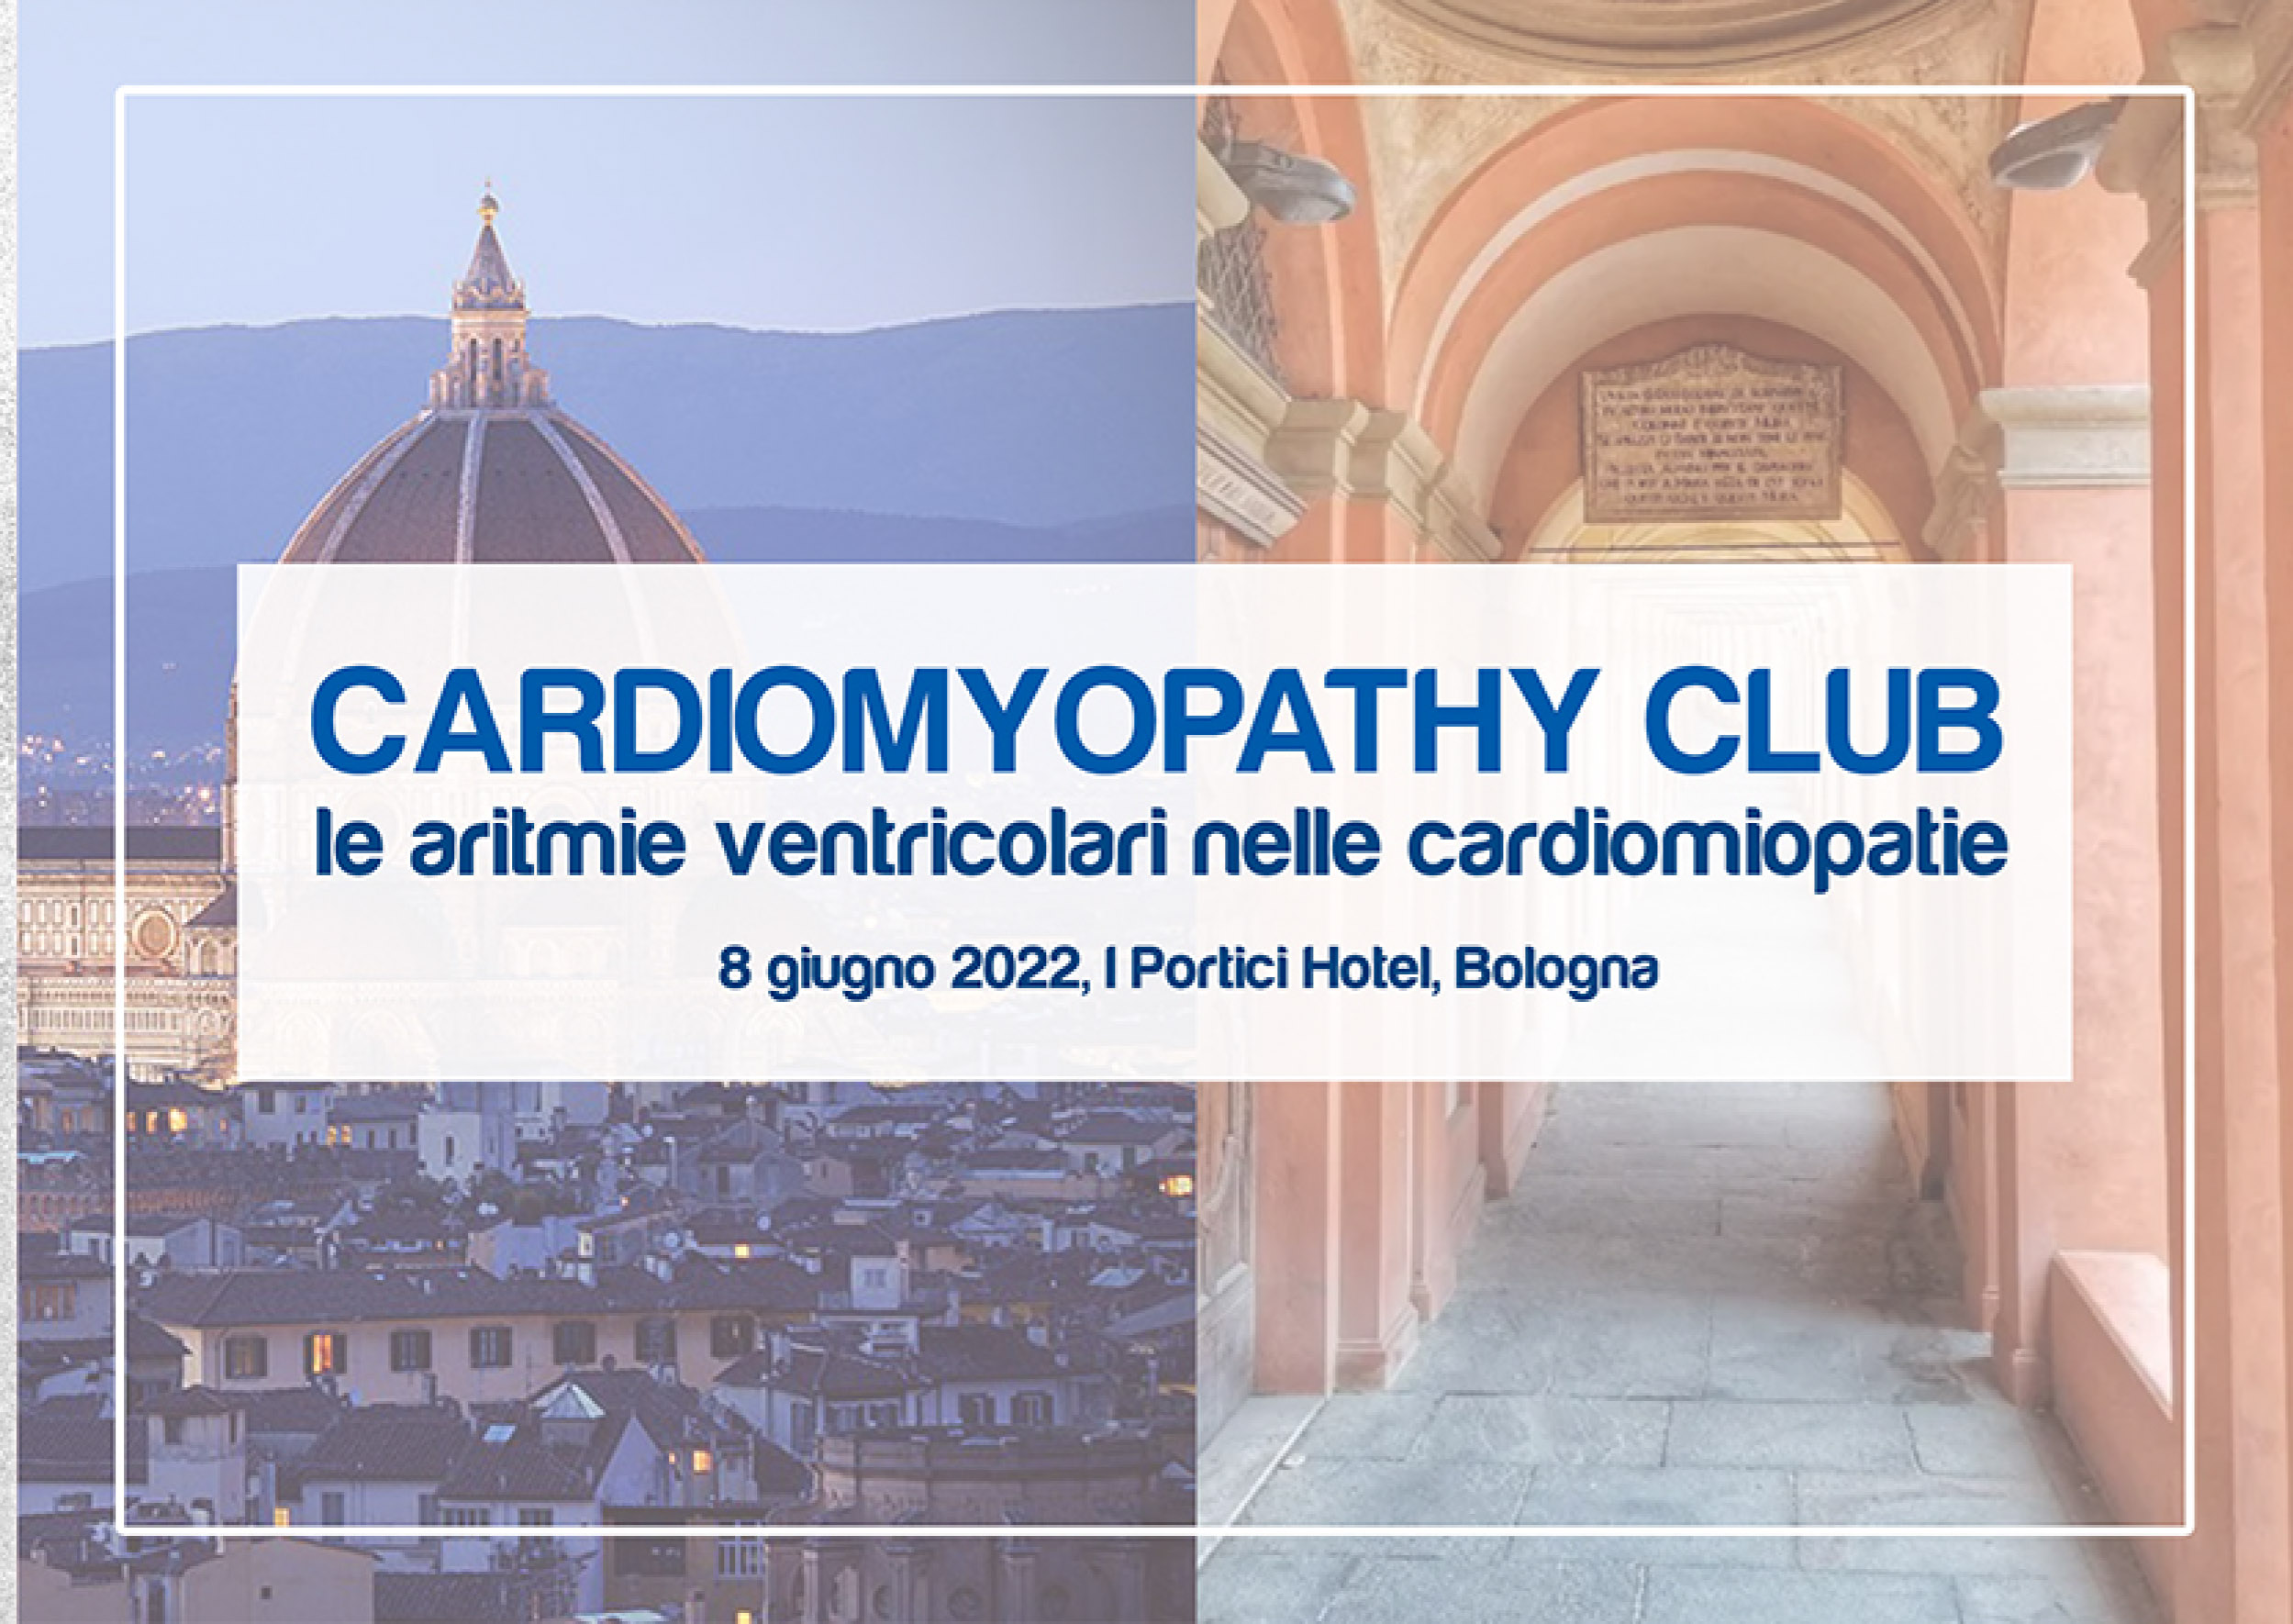 Cardiomiopathy Club. Le aritmie ventricolari nelle cardiomiopatie 